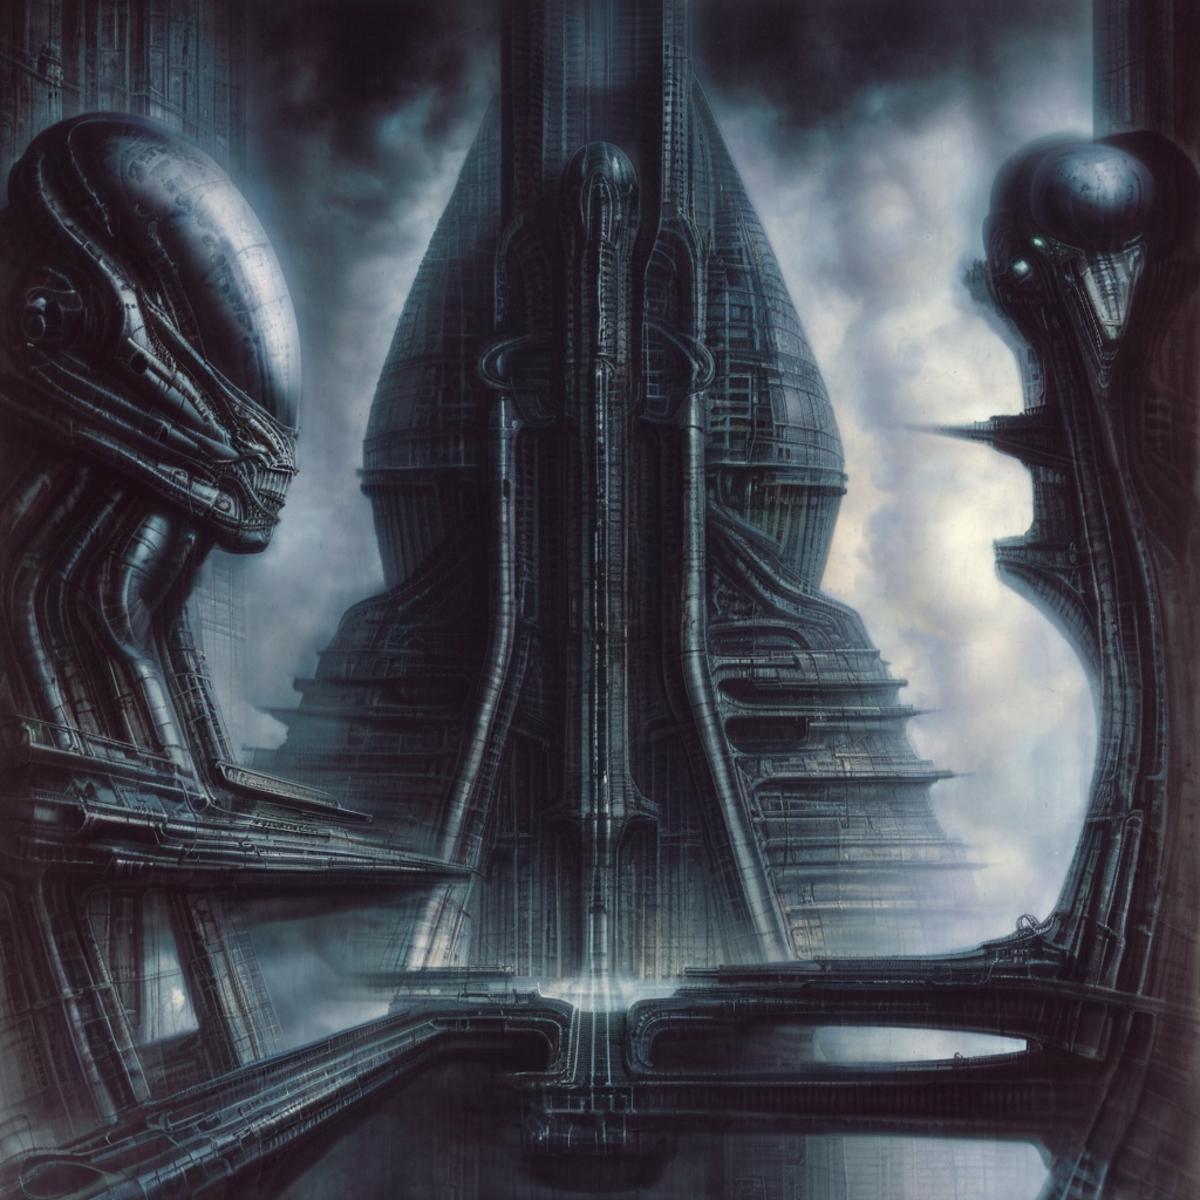 An artistic illustration of a futuristic alien structure in a dark, cloudy sky.